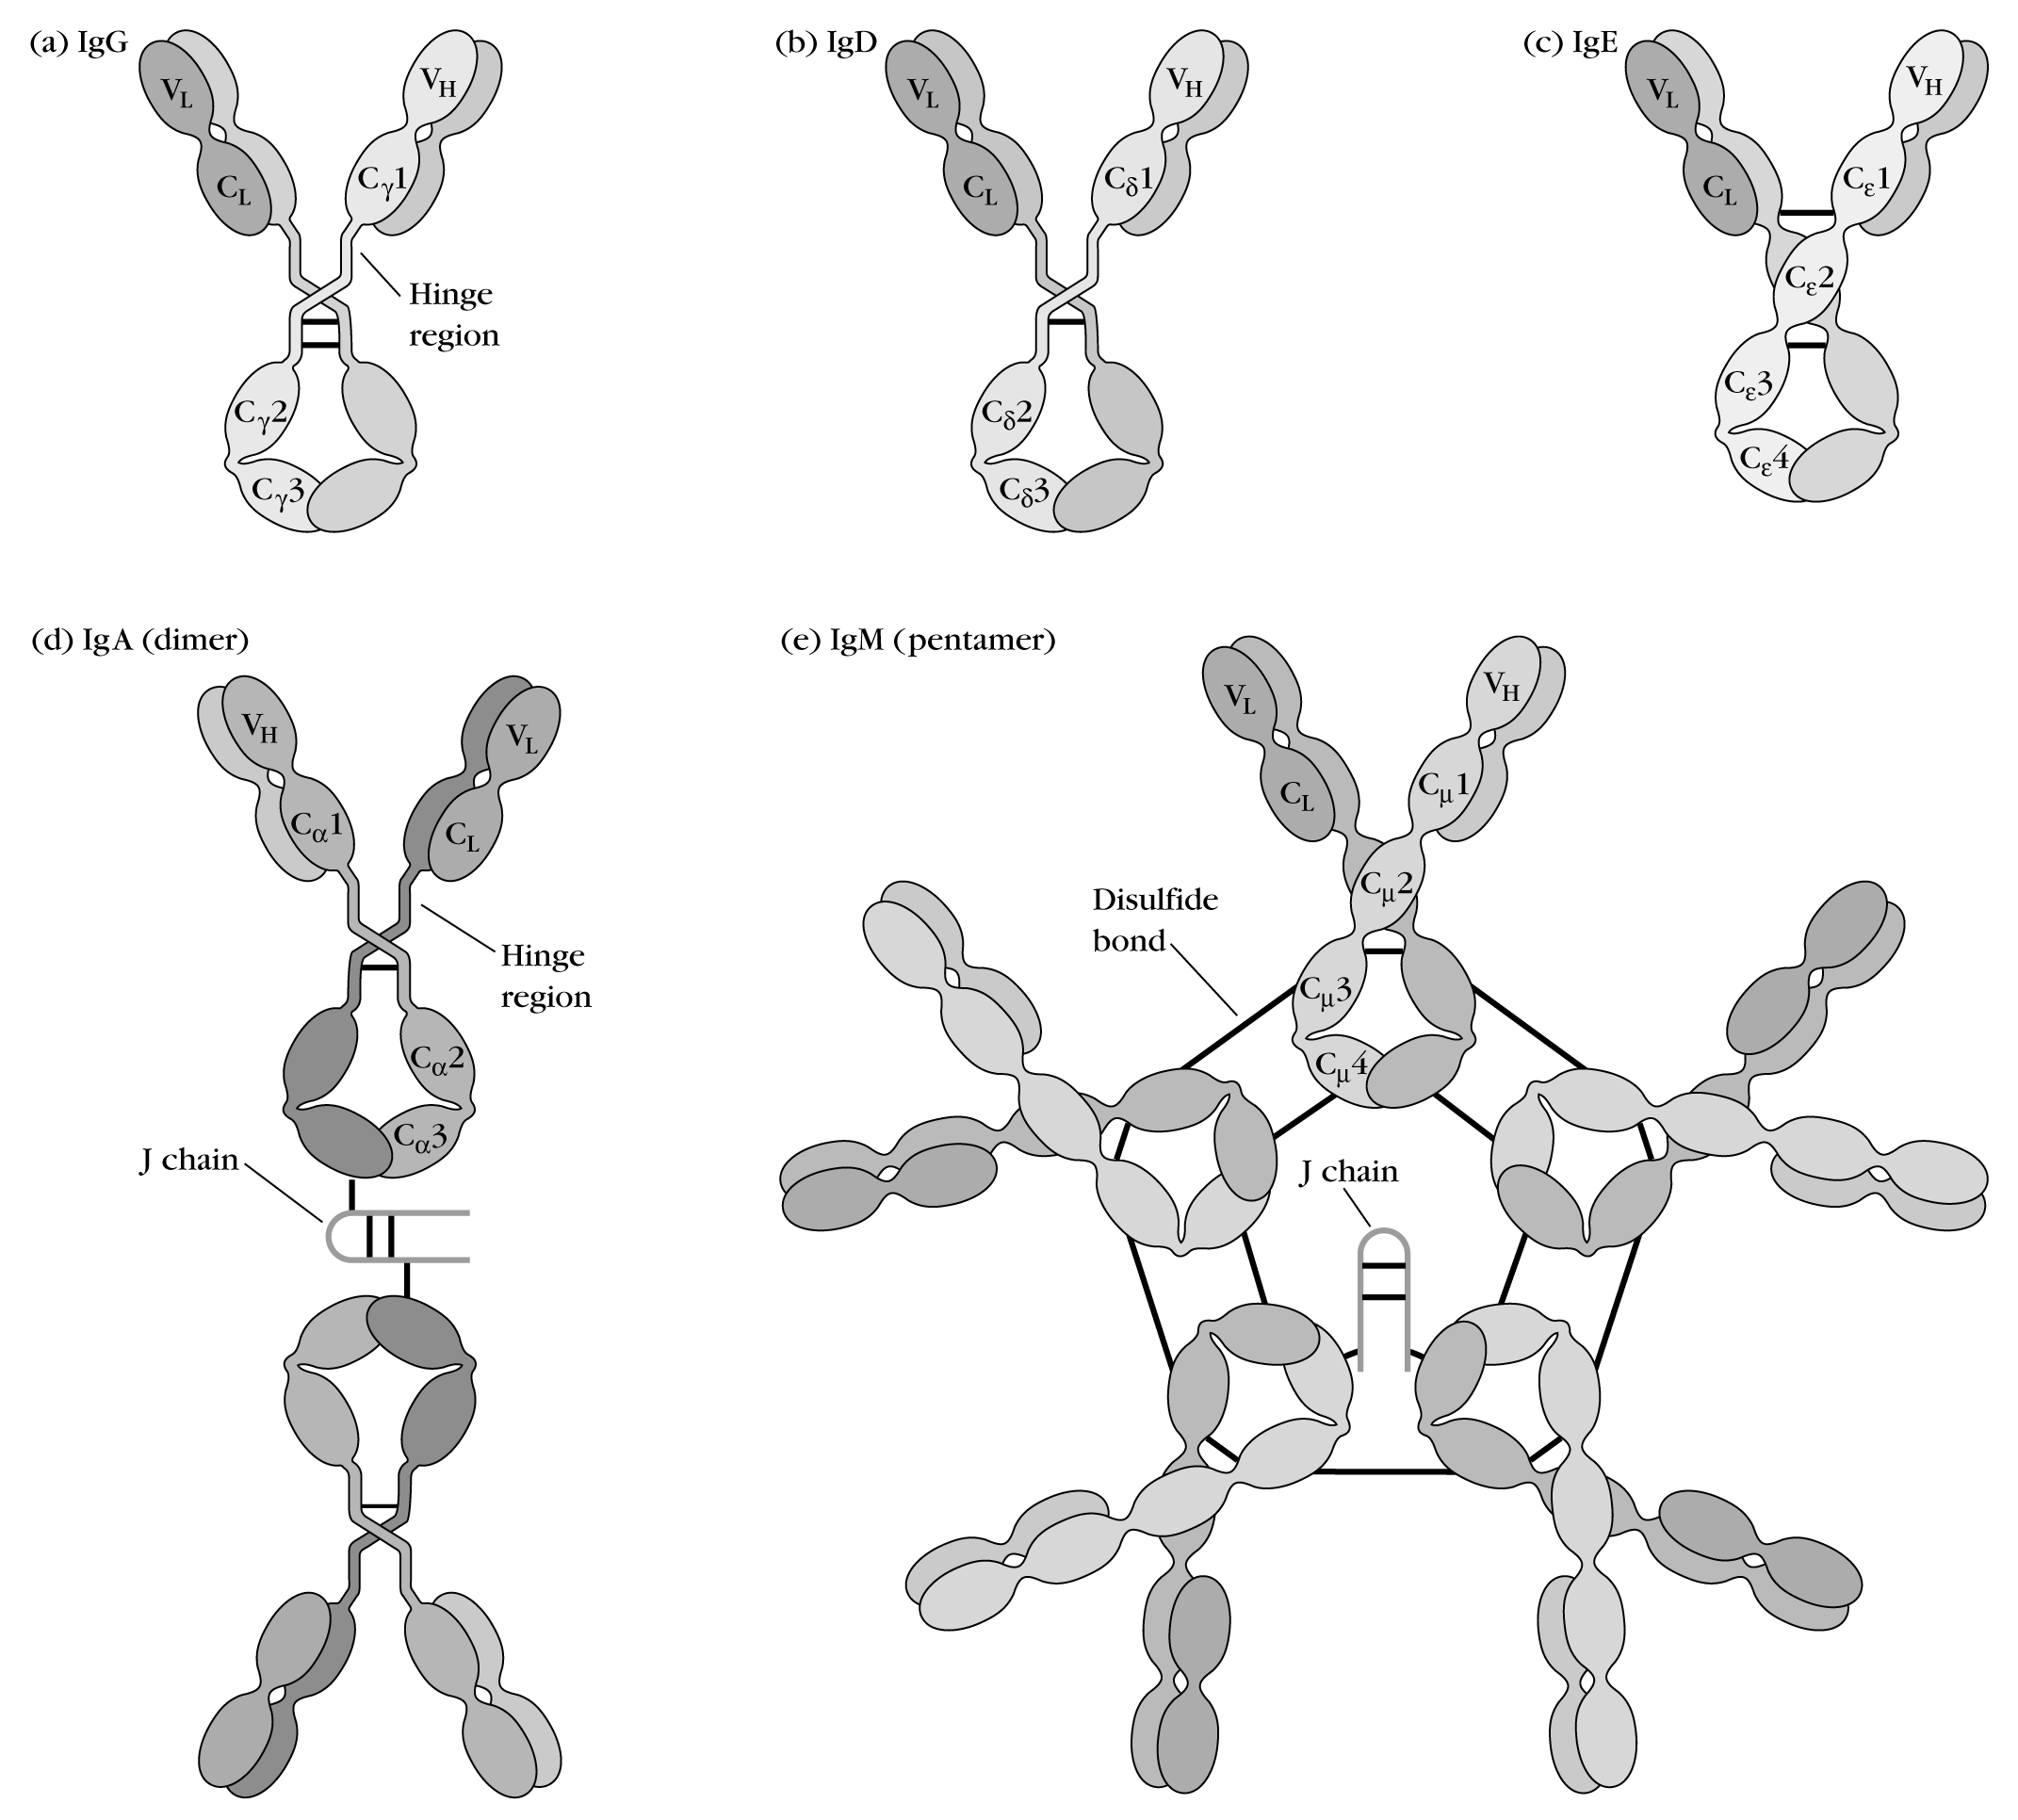 Иммуноглобулины iga igm. Иммуноглобулин m строение. Иммуноглобулин д структура. IGM строение иммуноглобулина. Иммуноглобулины класса d (IGD).